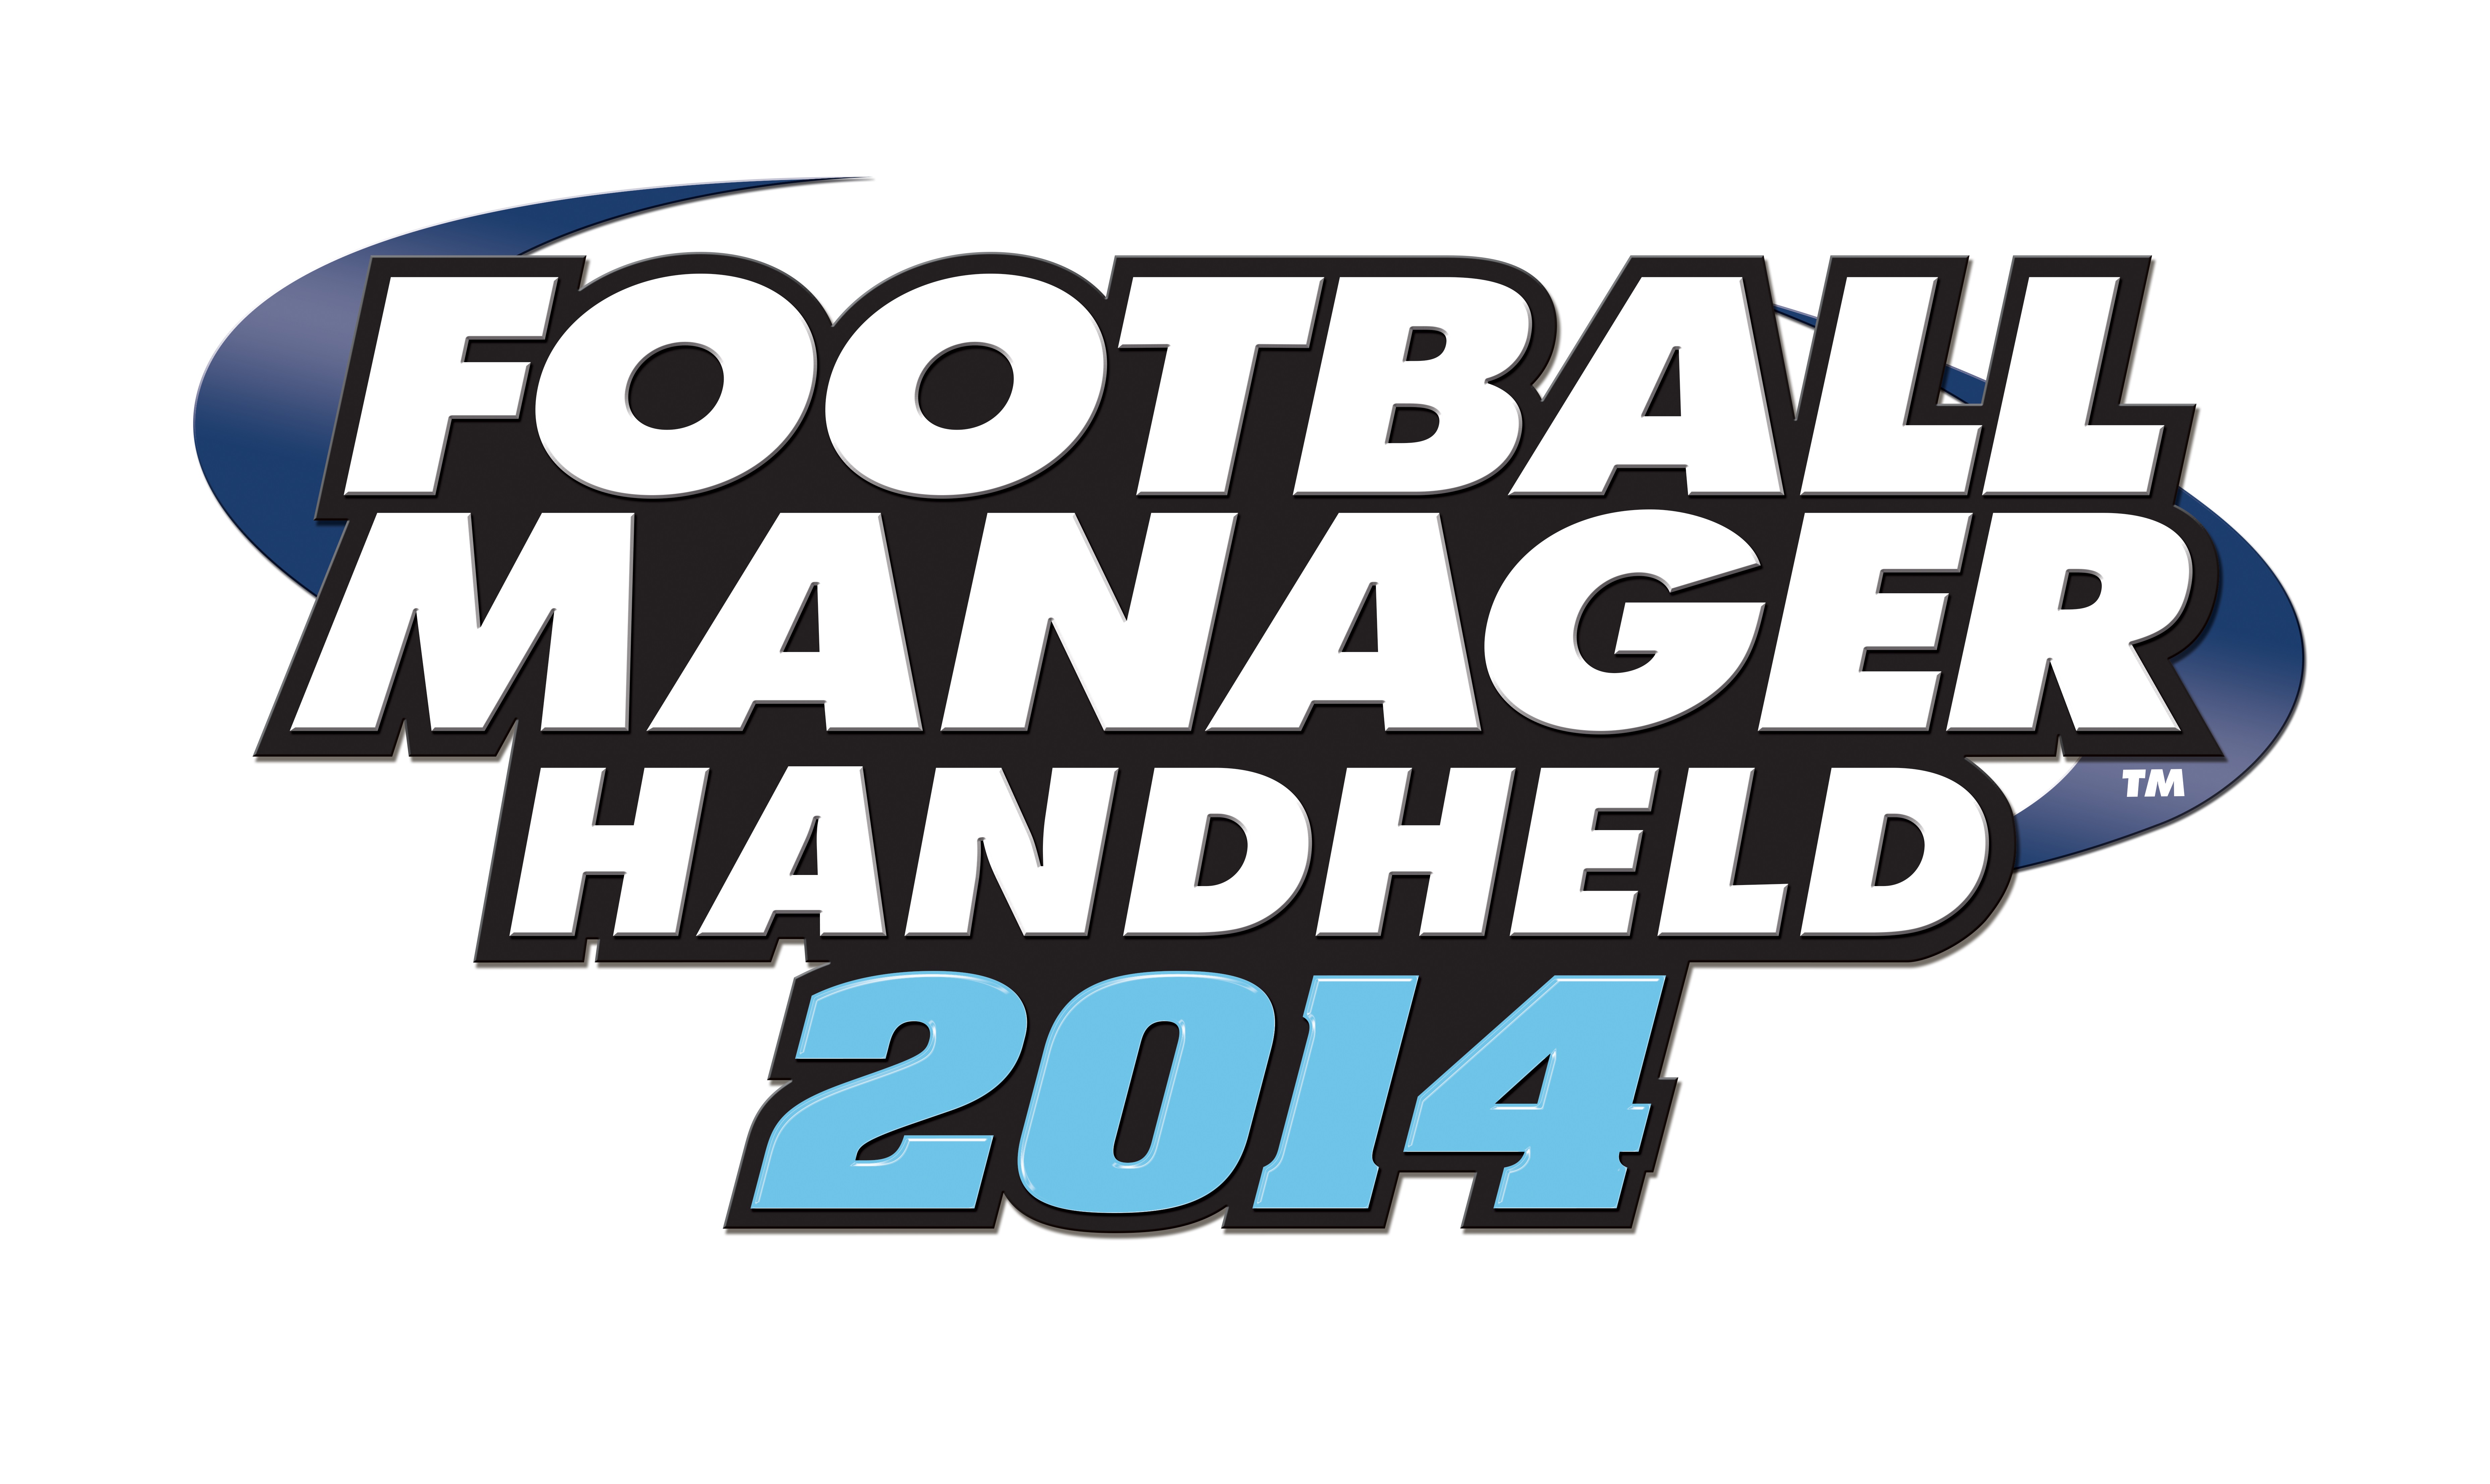 Football Manager Handheld 2014 Money Hack Tool - CheatsGo! - 7425 x 4425 jpeg 1423kB